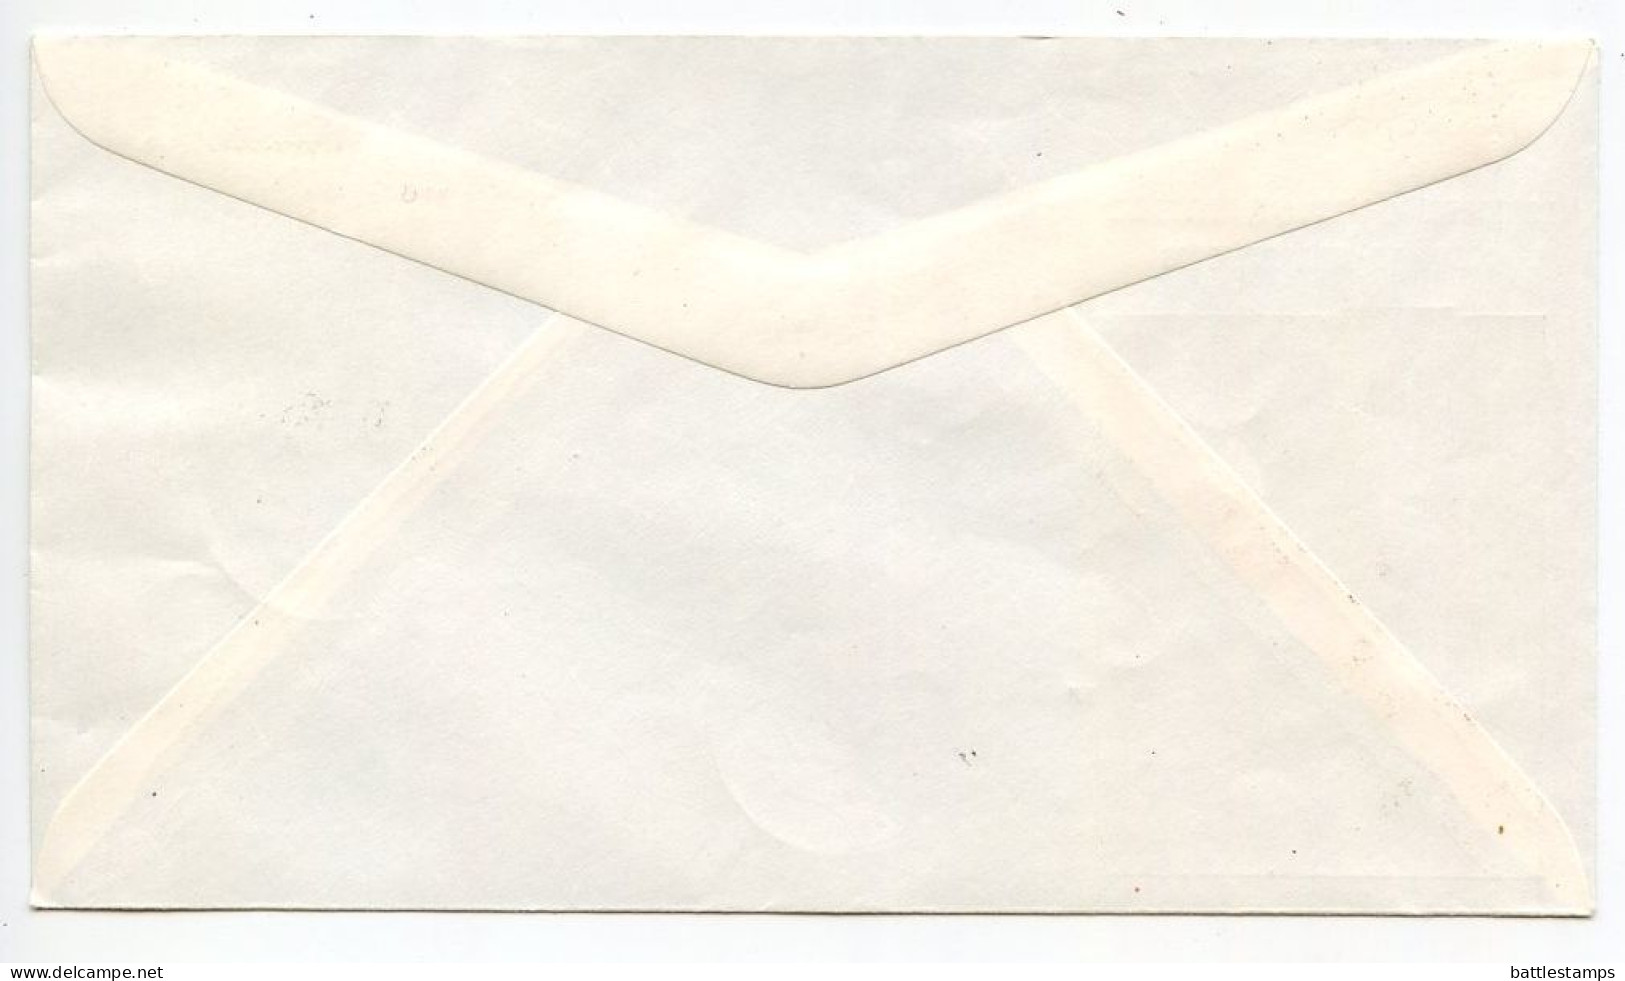 Saar 1959 Commemorative Cover Letzter Gültigkeitstag Für Freimarken / Last Day Of Validity For Postage Stamps - Storia Postale